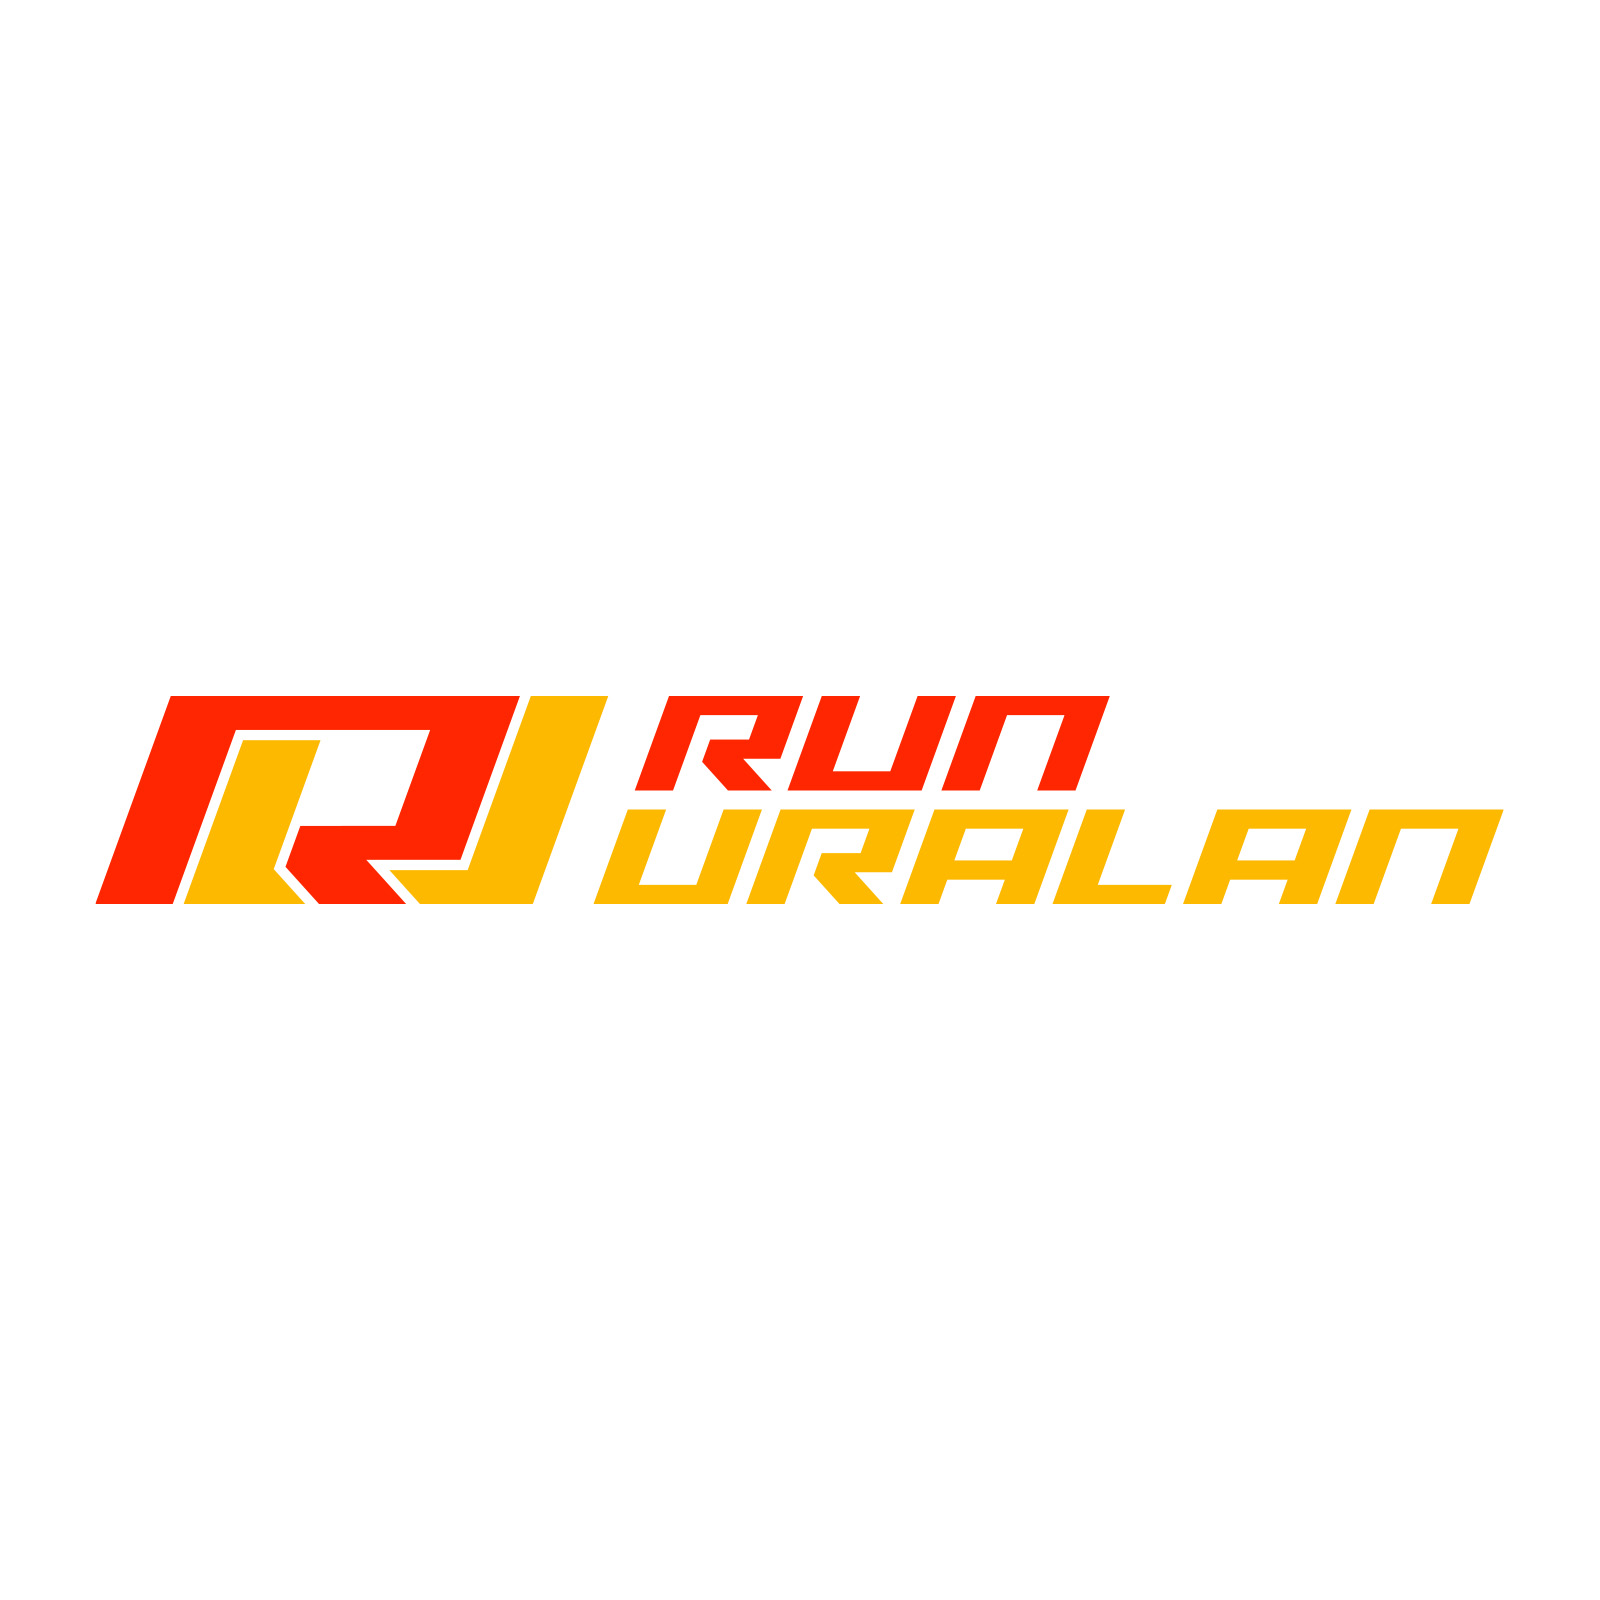 RunUralan logo design by logo designer Stanislav+Regis for your inspiration and for the worlds largest logo competition